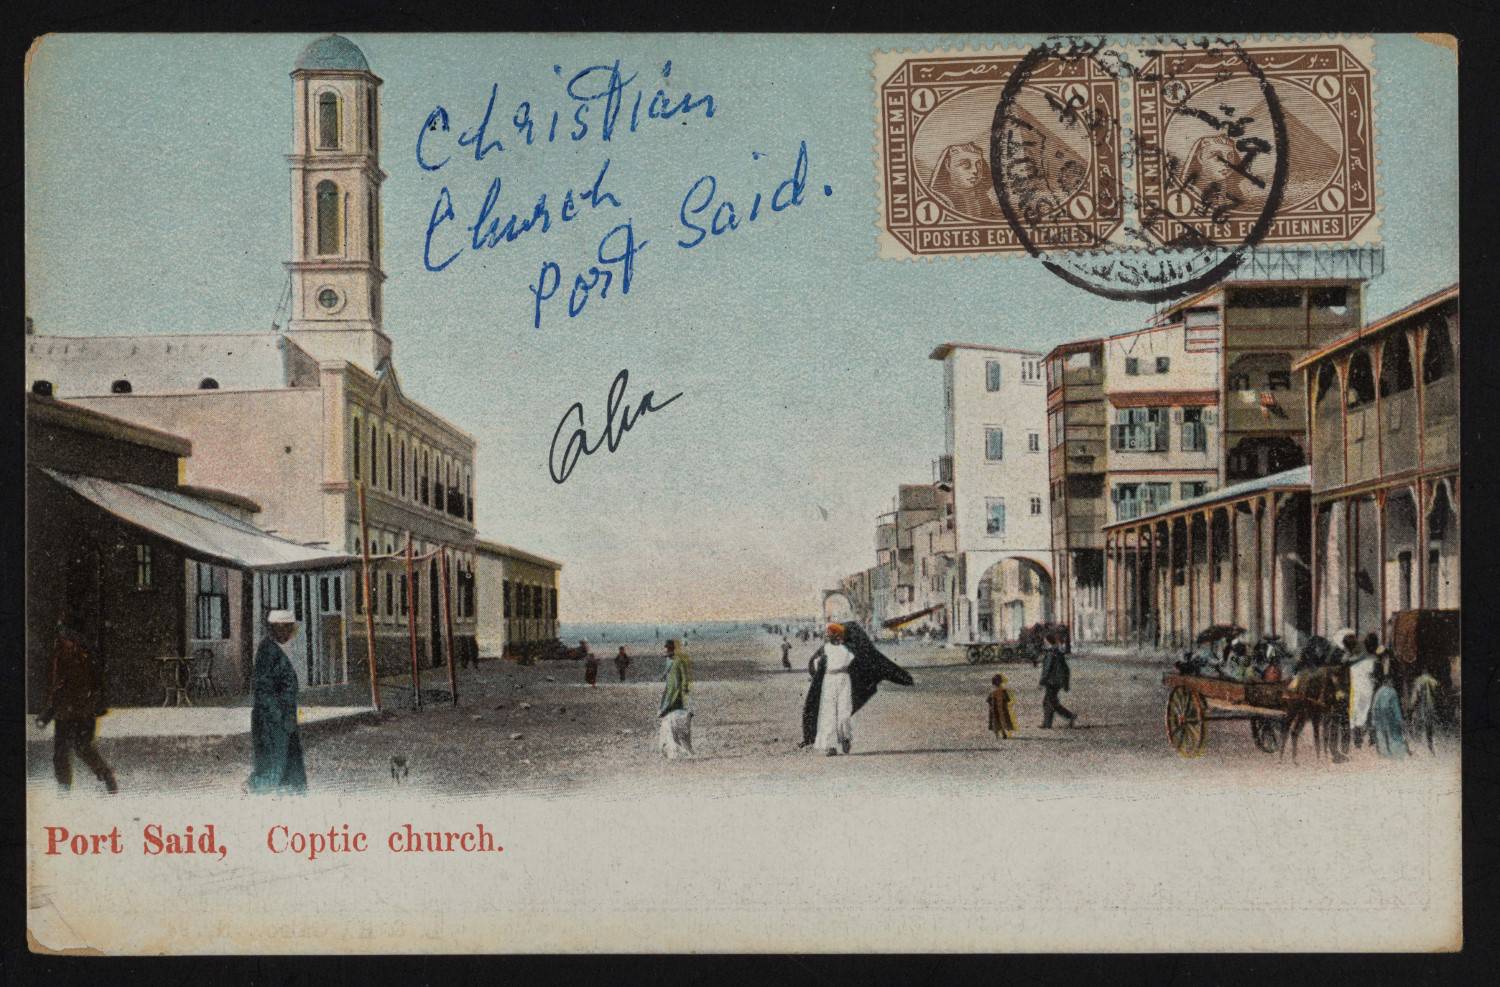 Postcard of the Coptic church at Port Said